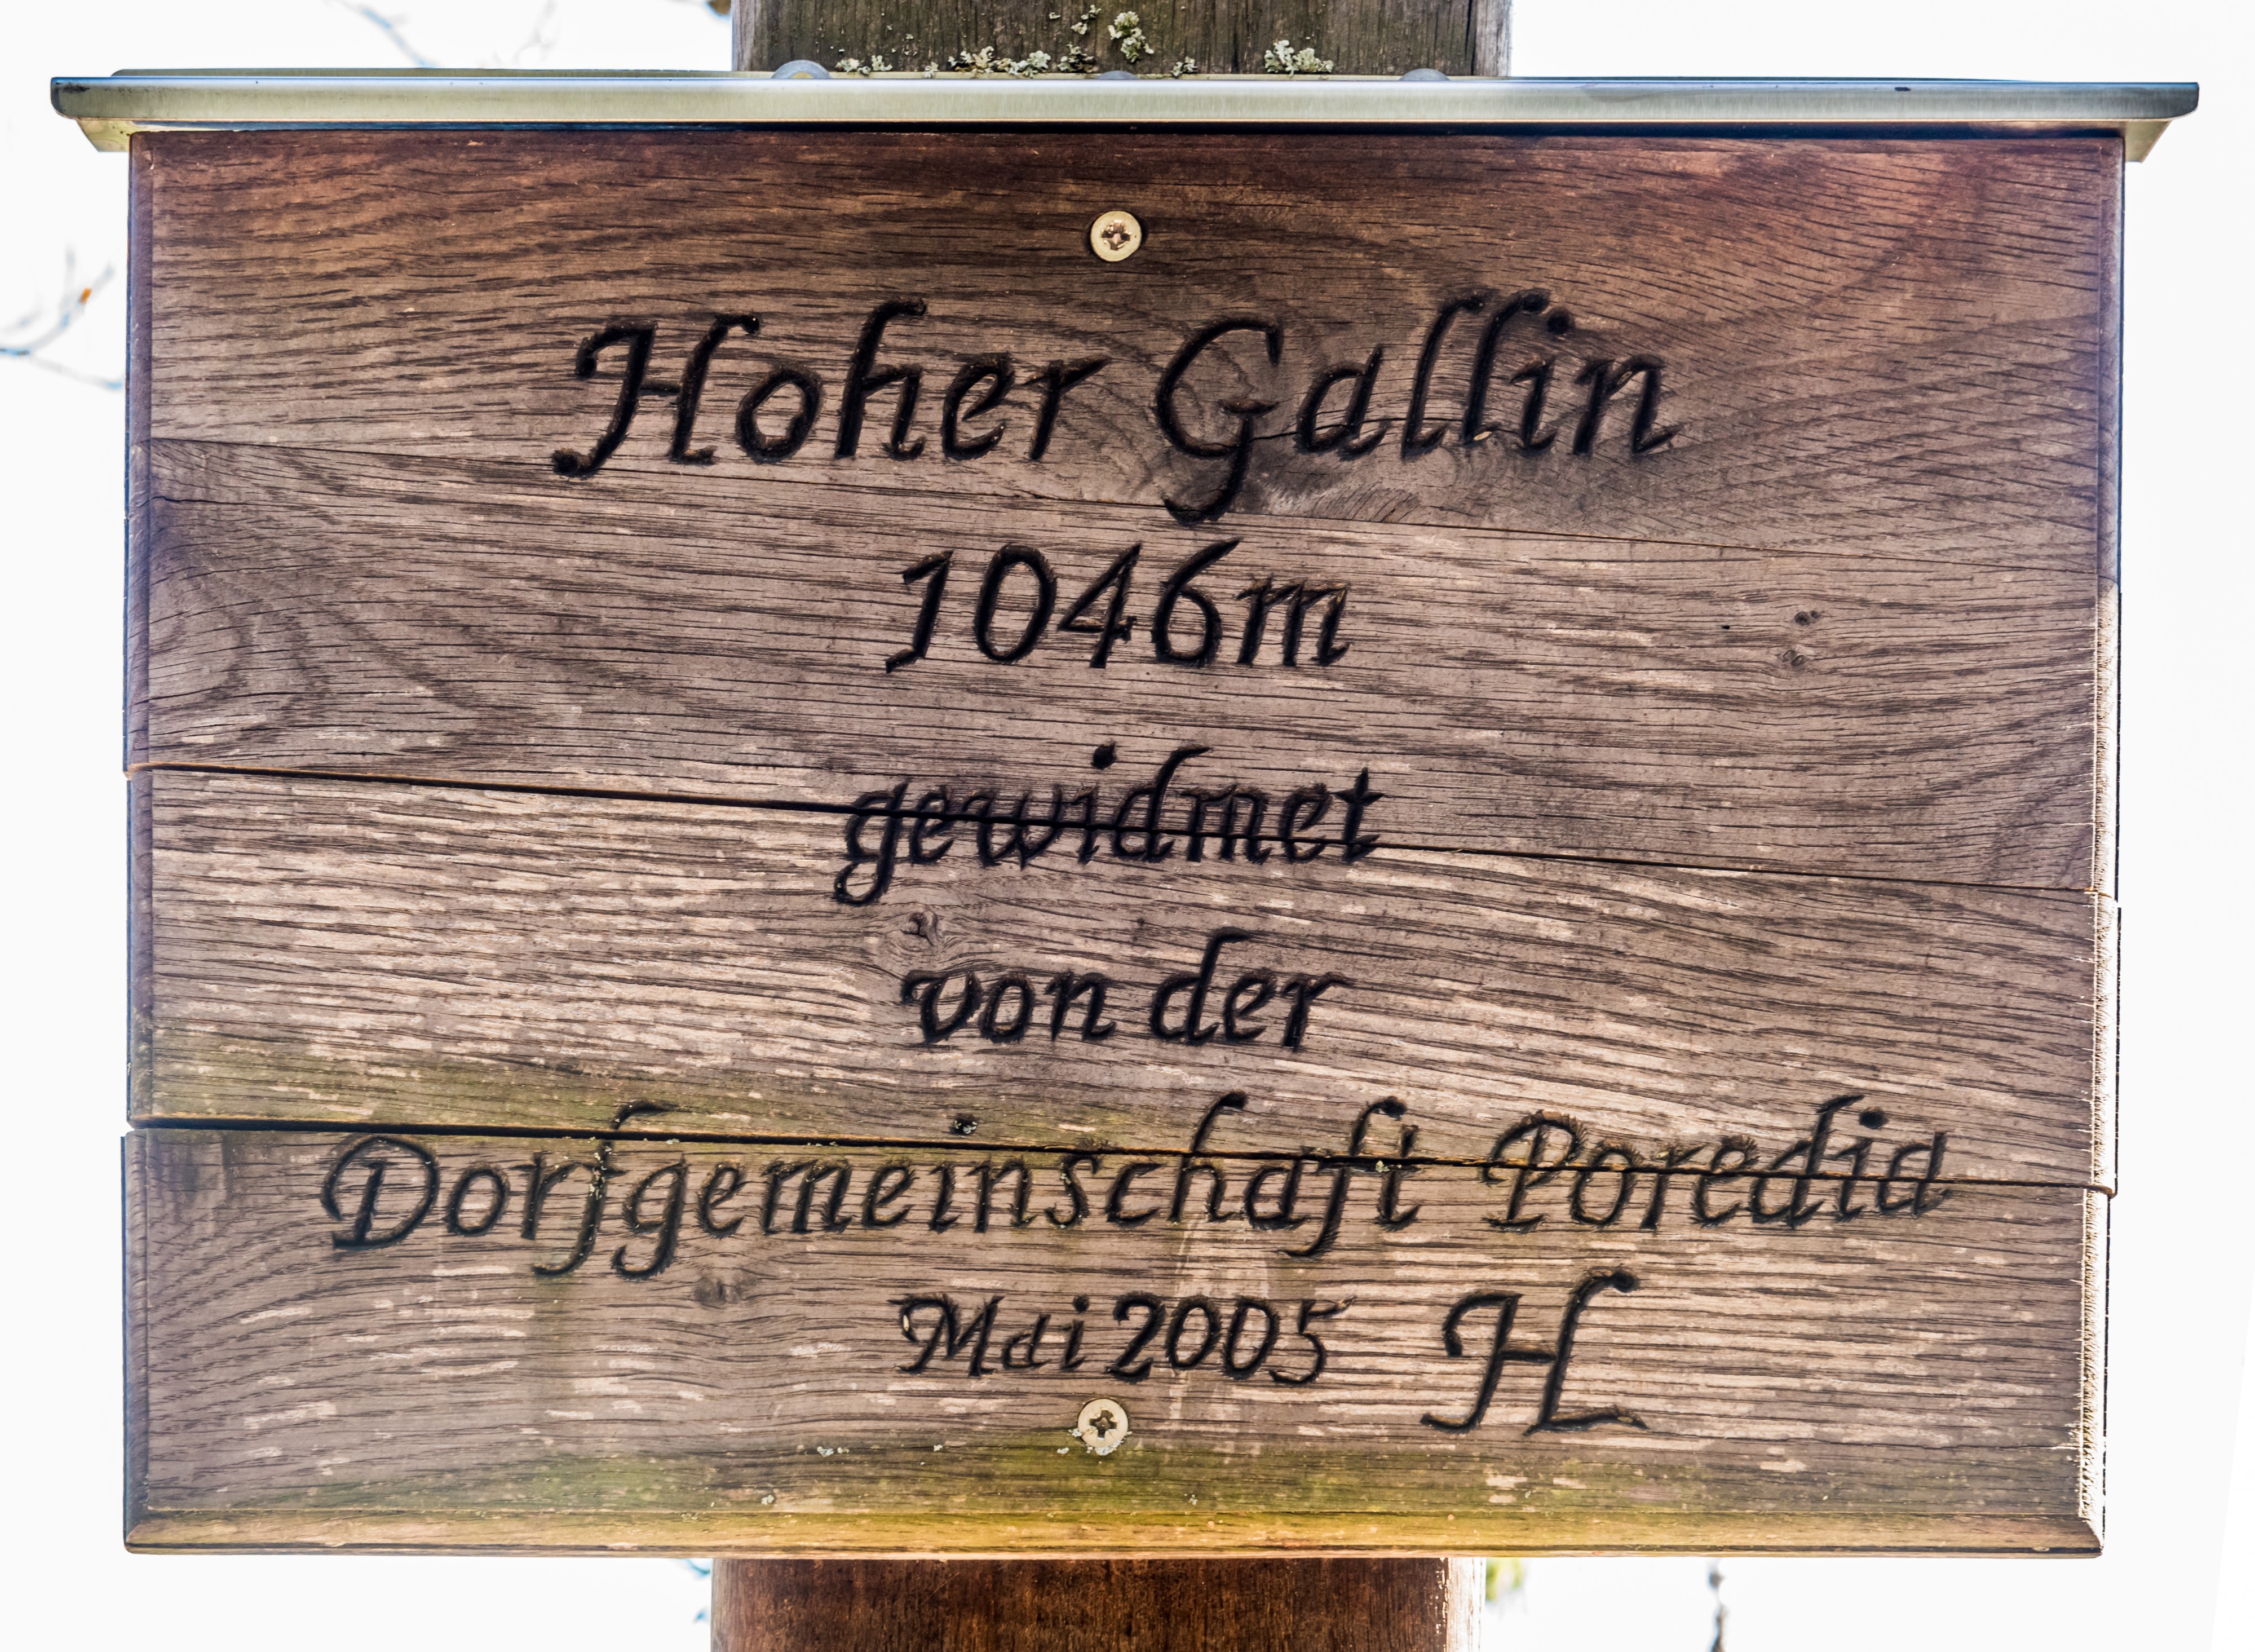 Techelsberg Hoher Gallin Gipfelkreuz Tafel 02042018 2854